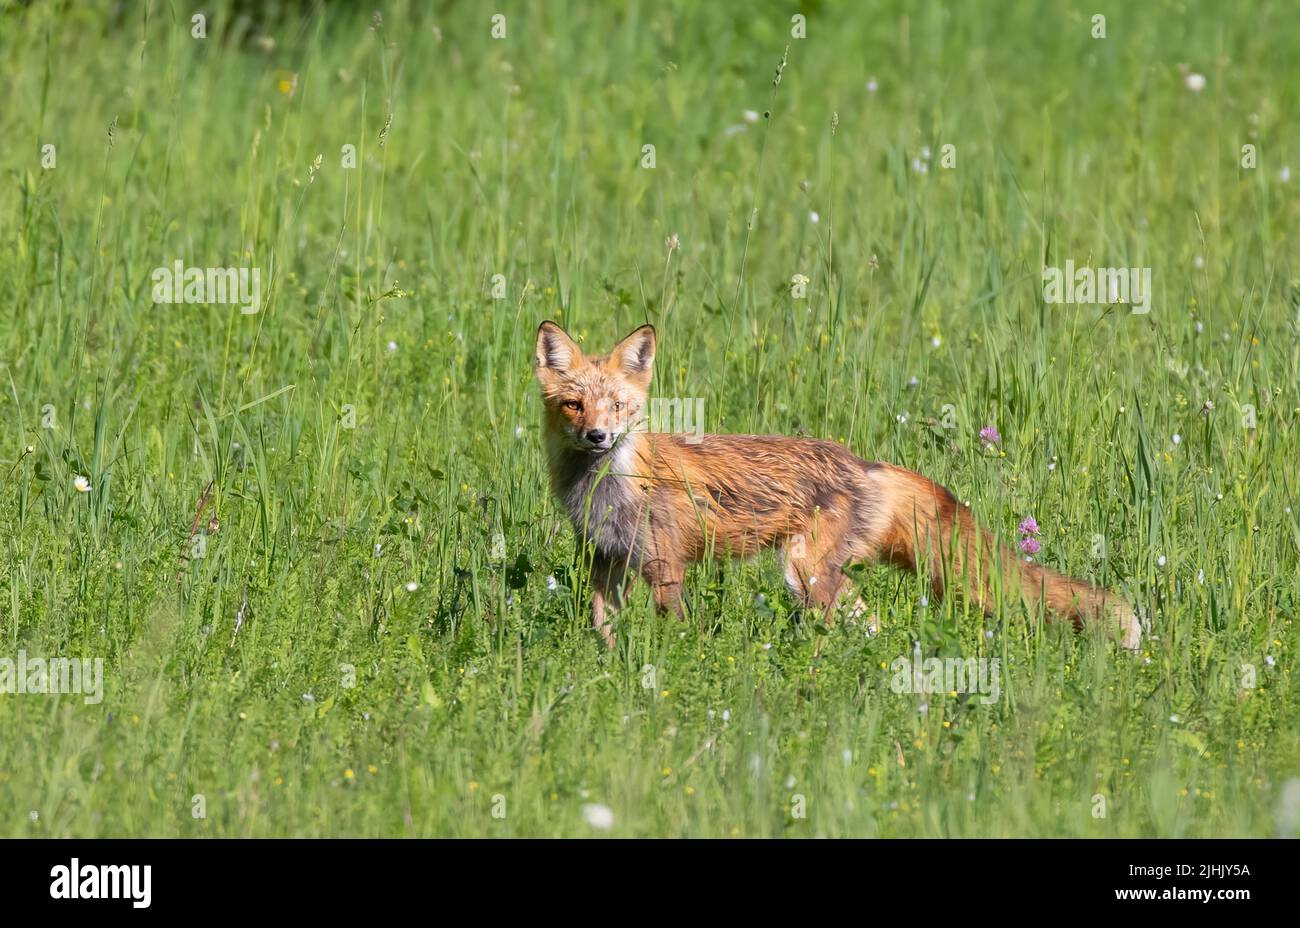 Red fox with a bushy tail walking through a grassy field near Ottawa, Canada Stock Photo